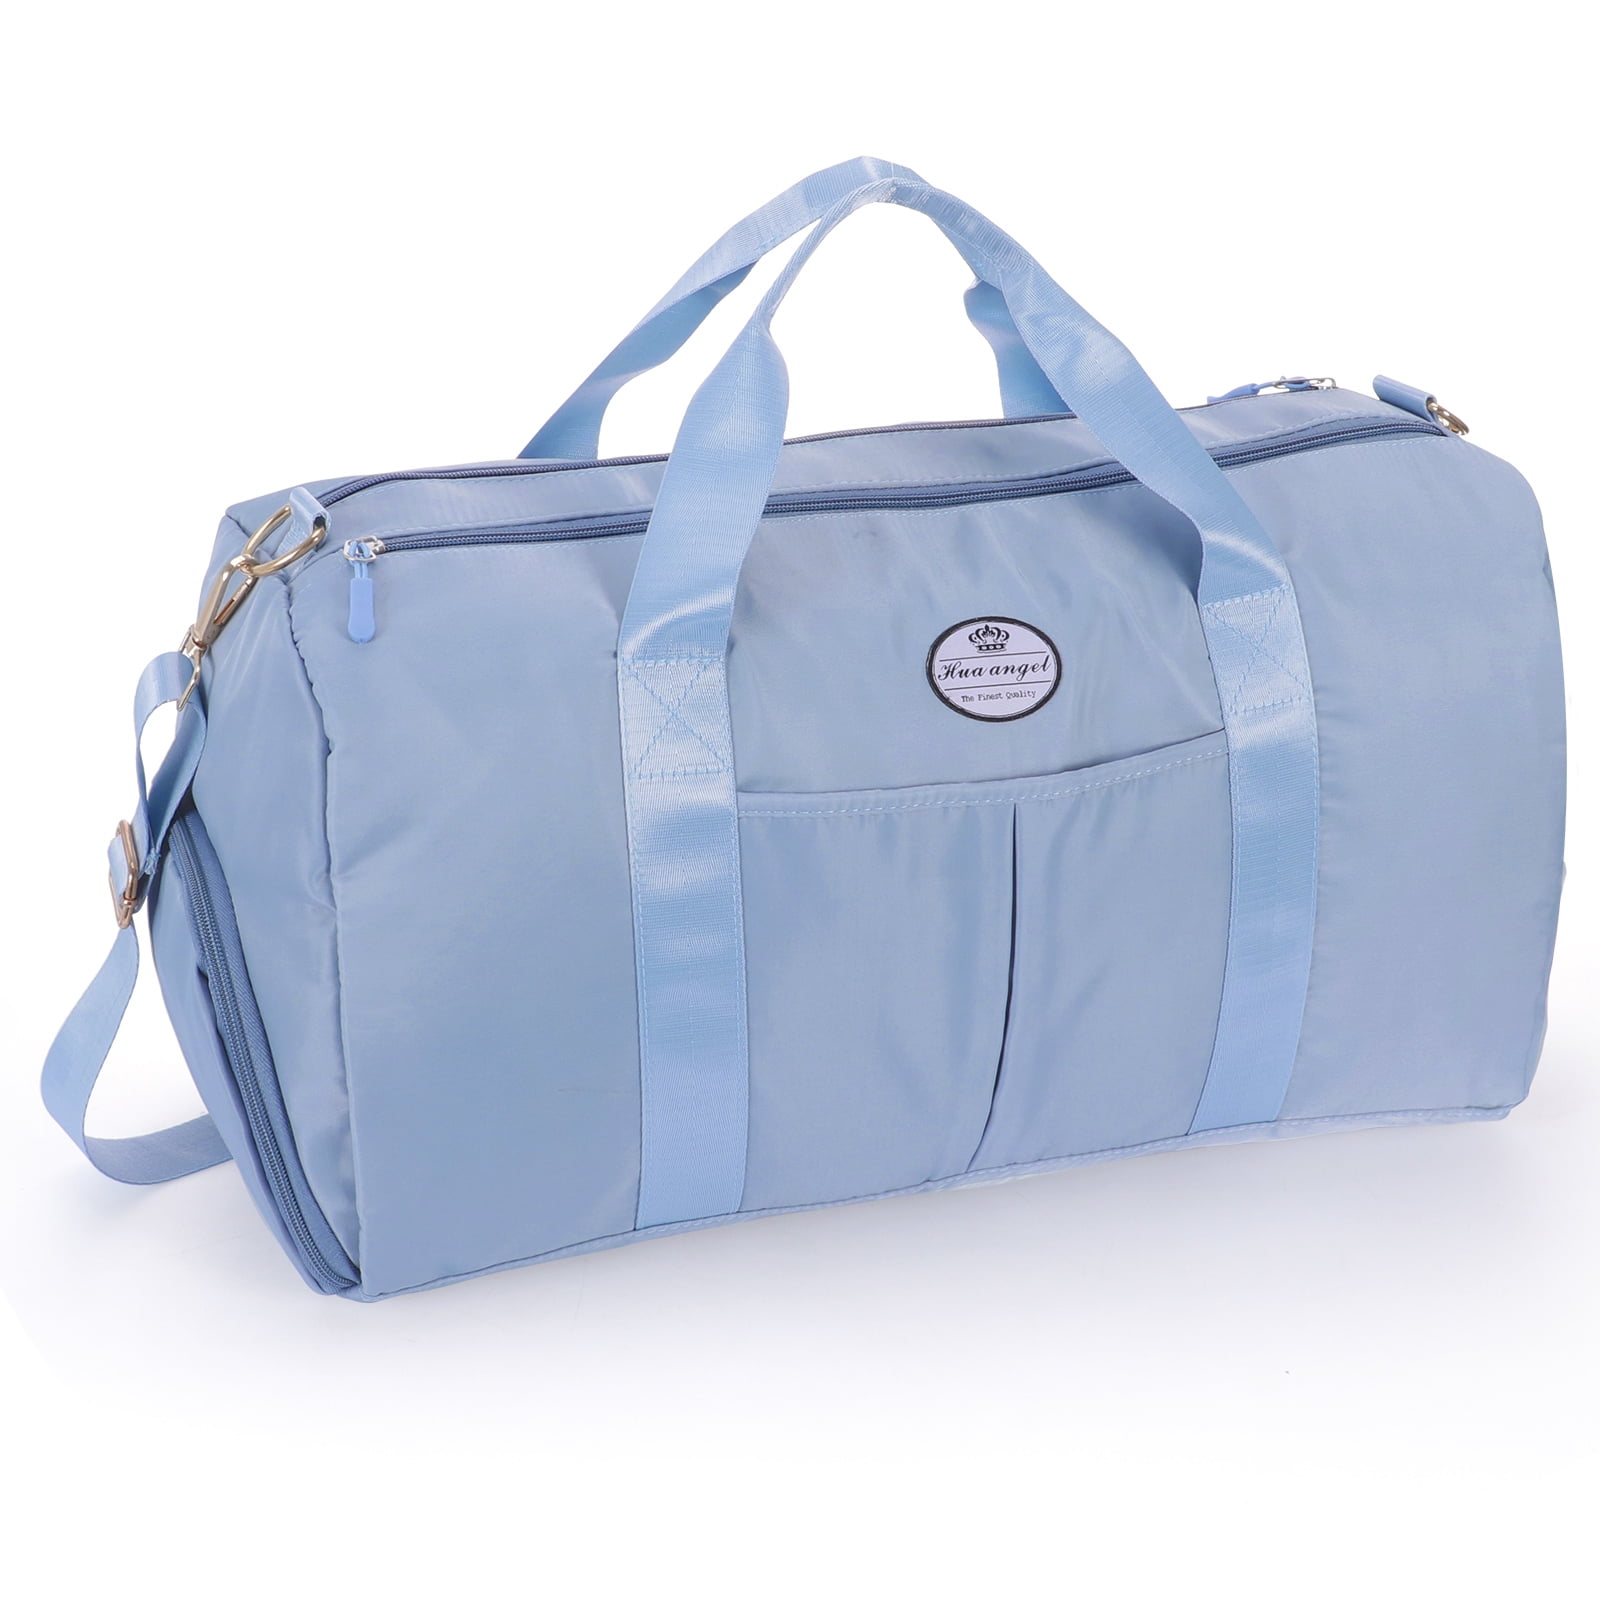 Travel Luggage Duffle Bag Lightweight Portable Handbag Colorful Monkey Print Large Capacity Waterproof Foldable Storage Tote 